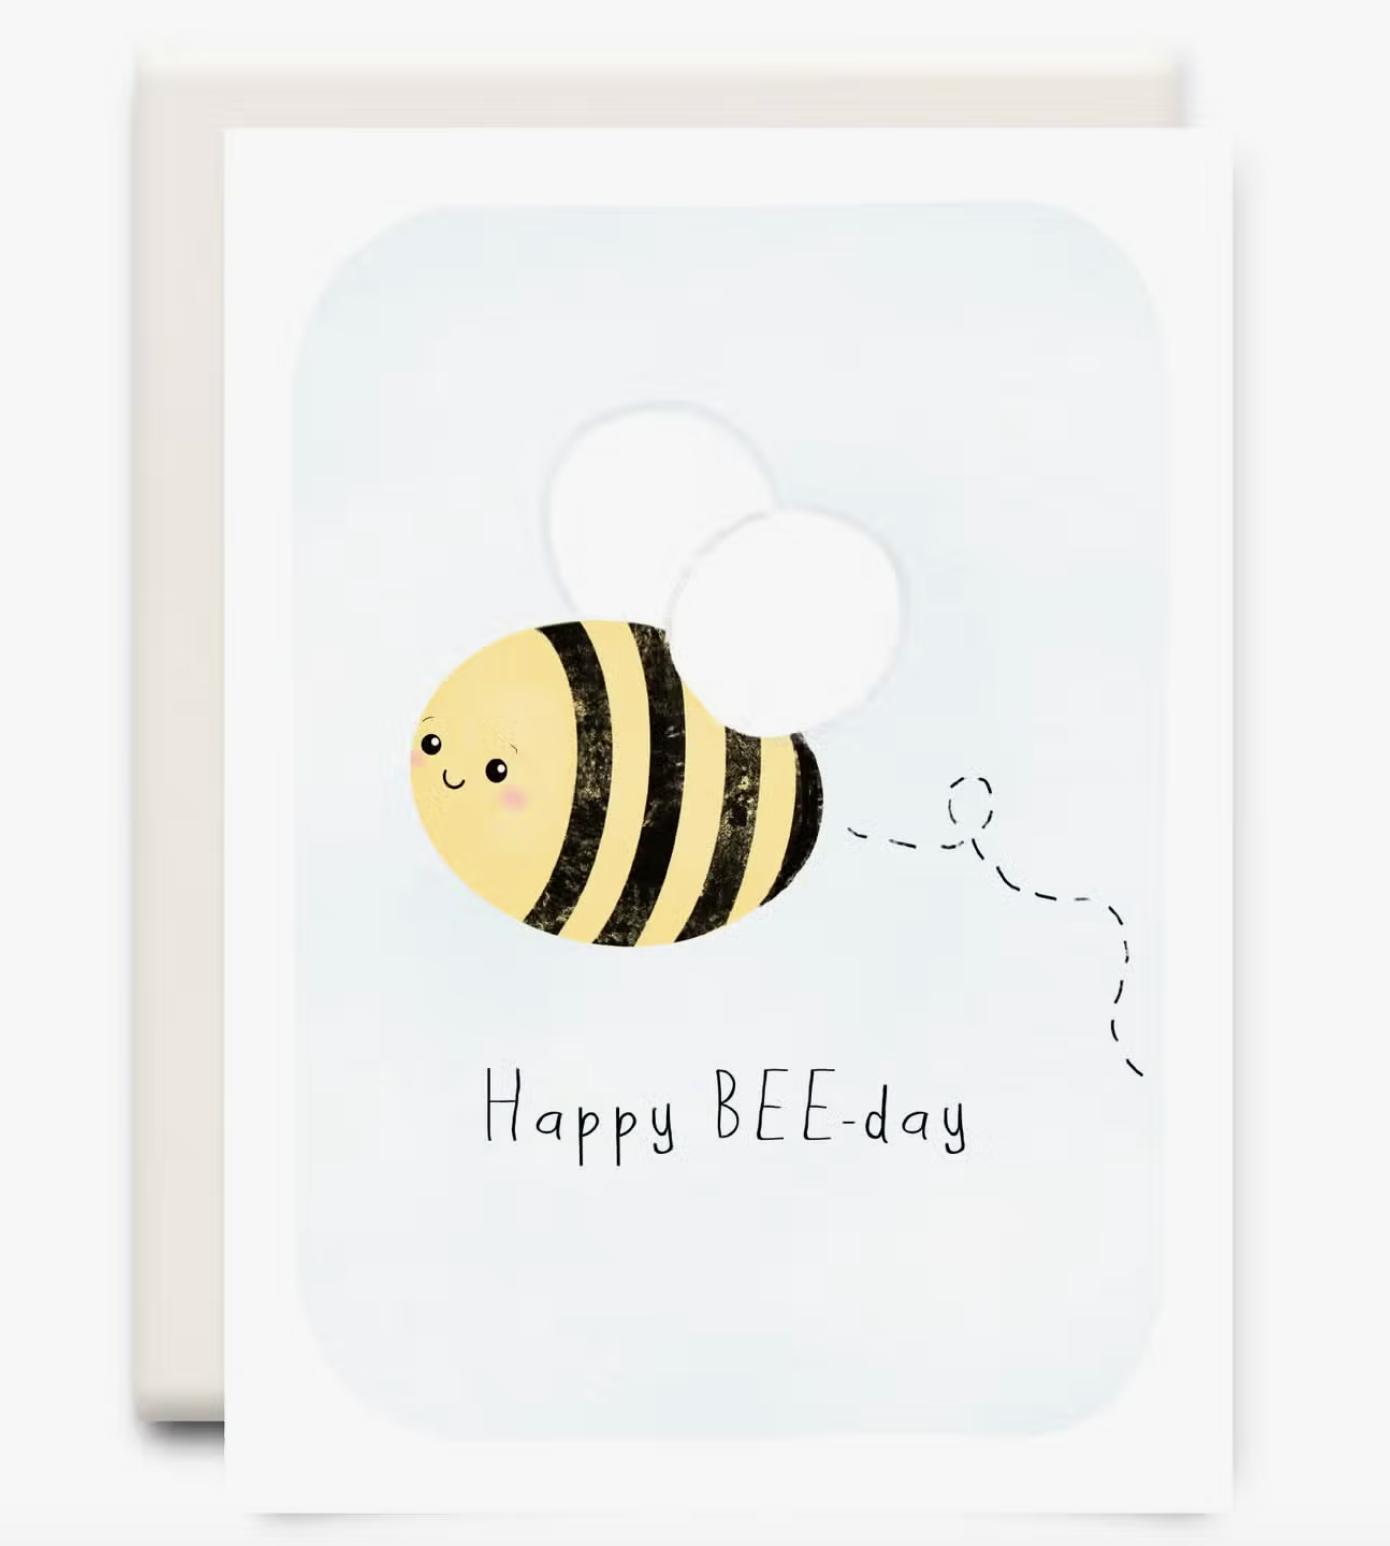 Happy Bee Day Birthday Card